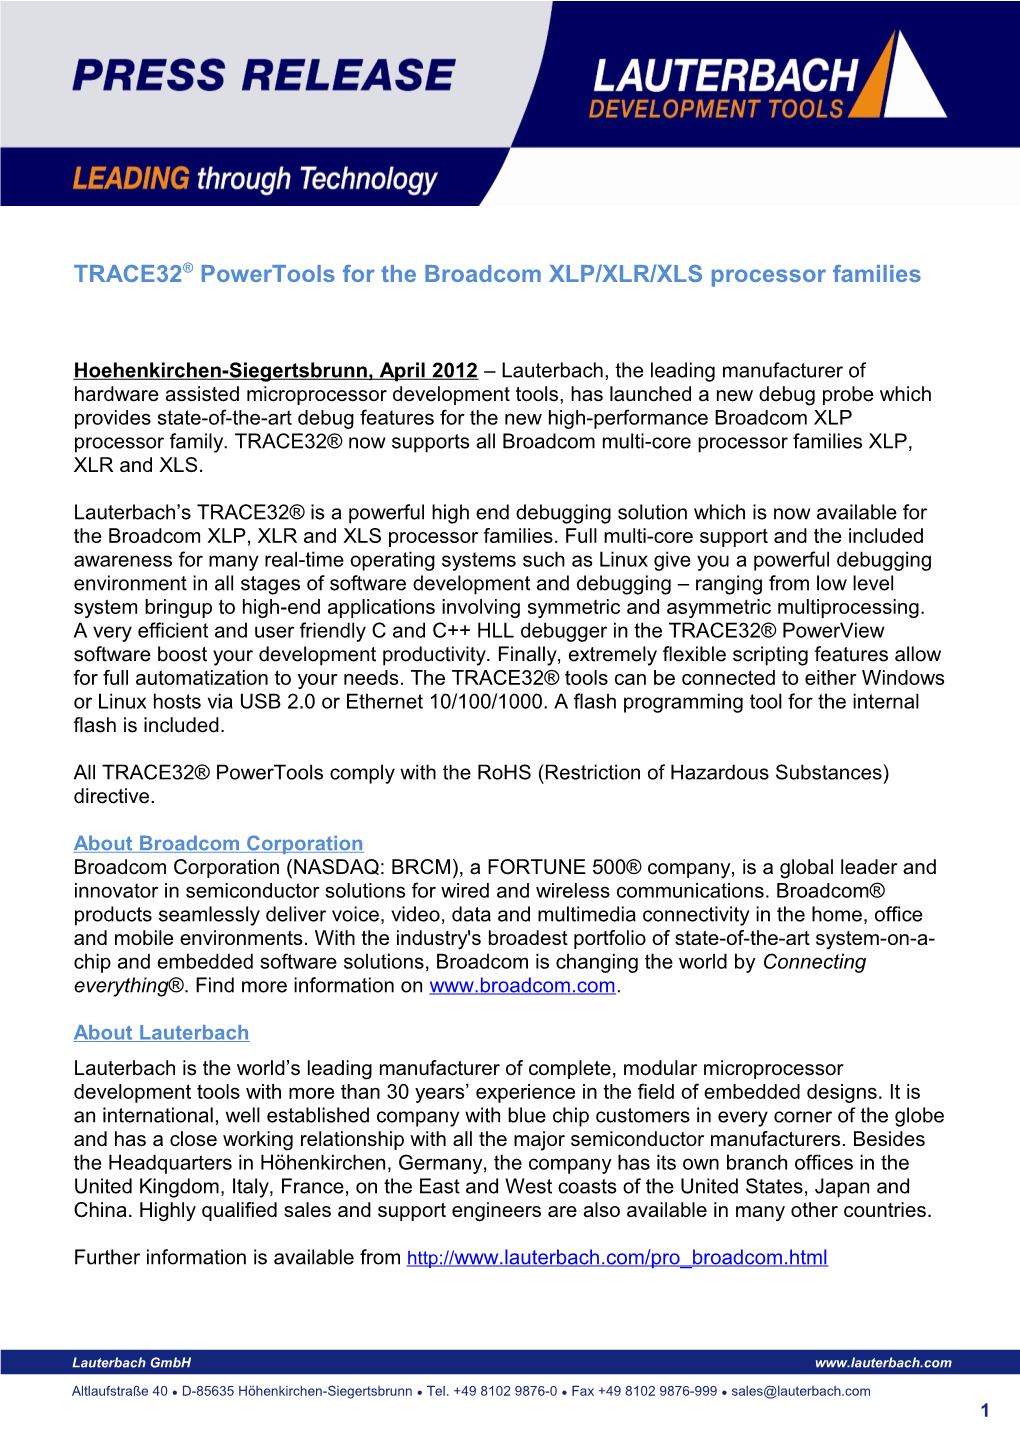 TRACE32 Powertools for the Broadcom XLP/XLR/XLS Processor Families